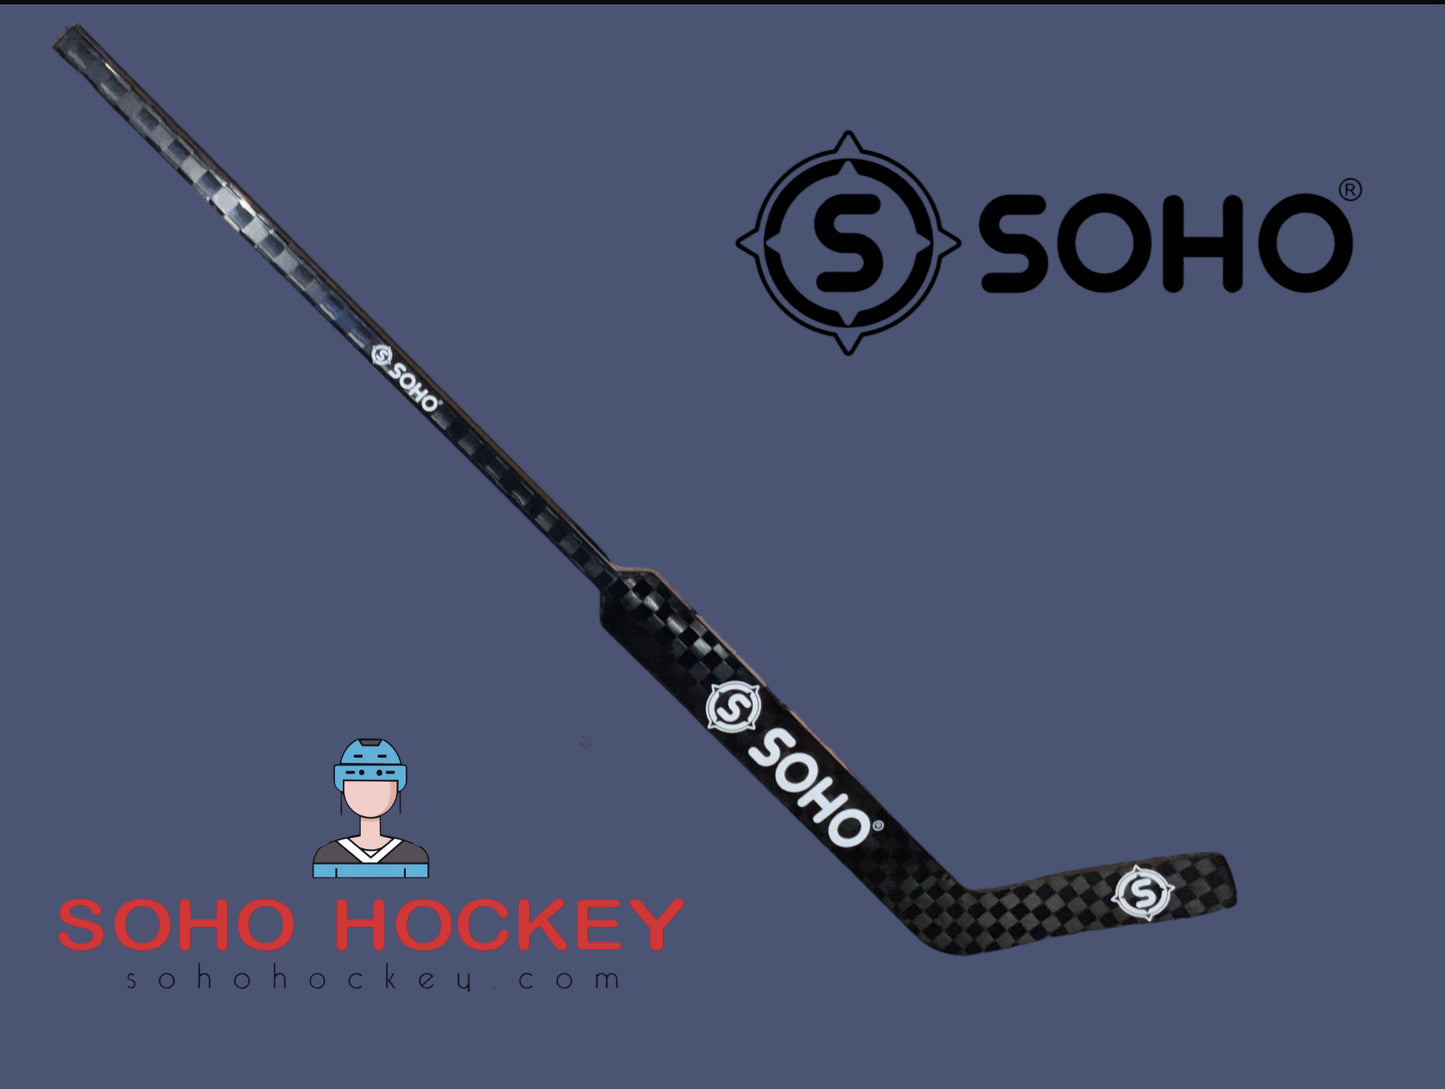 SOHO G1 Goalie Stick